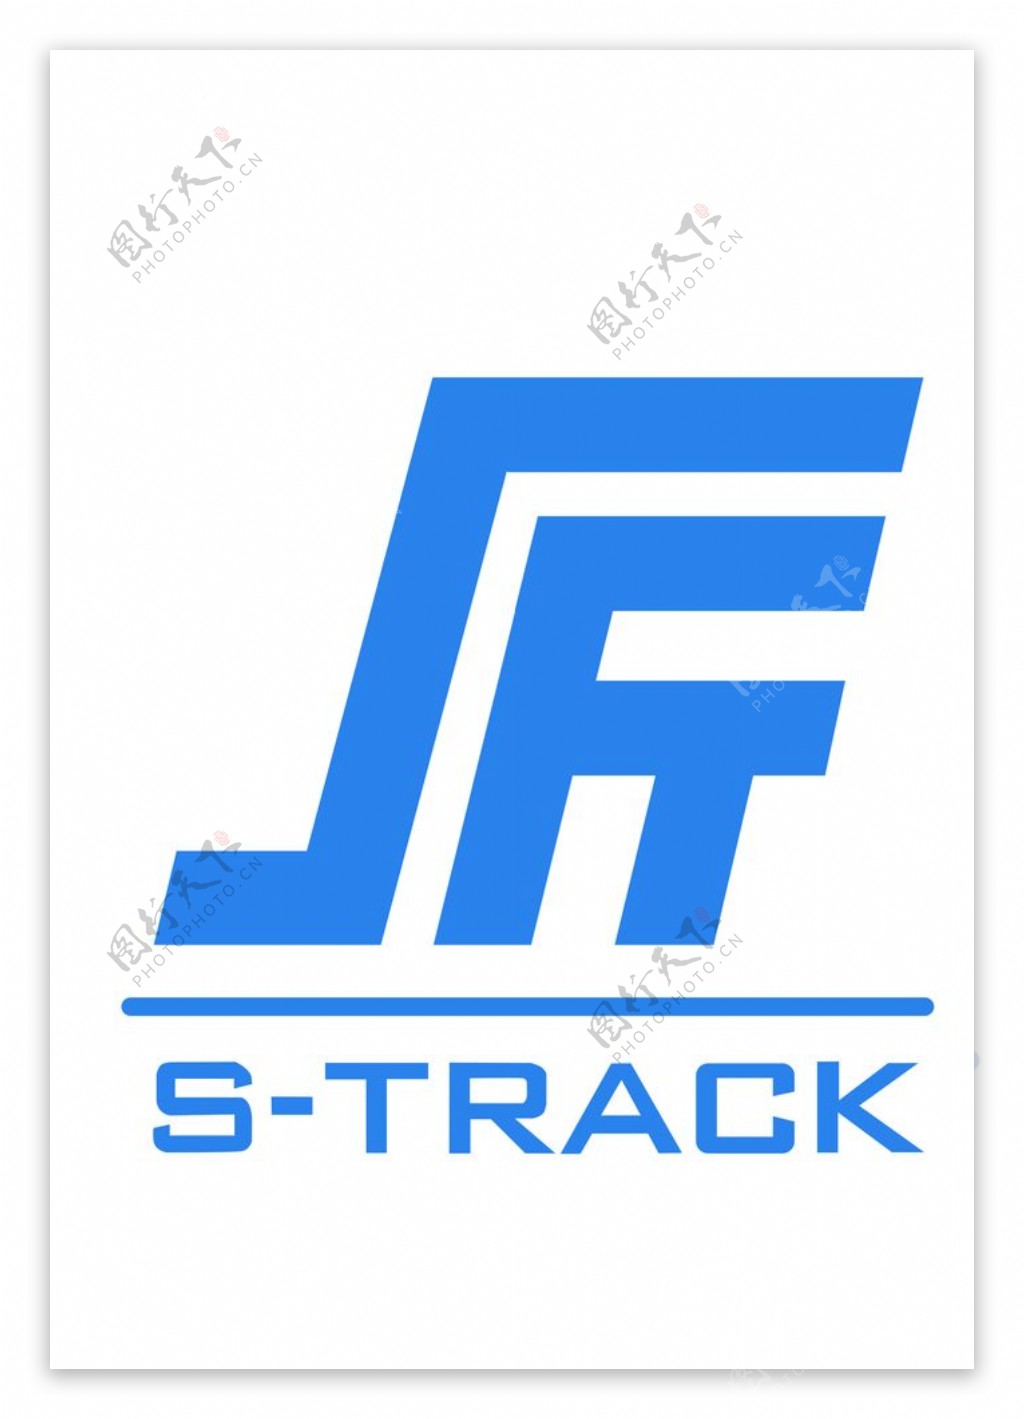 logo蓝色